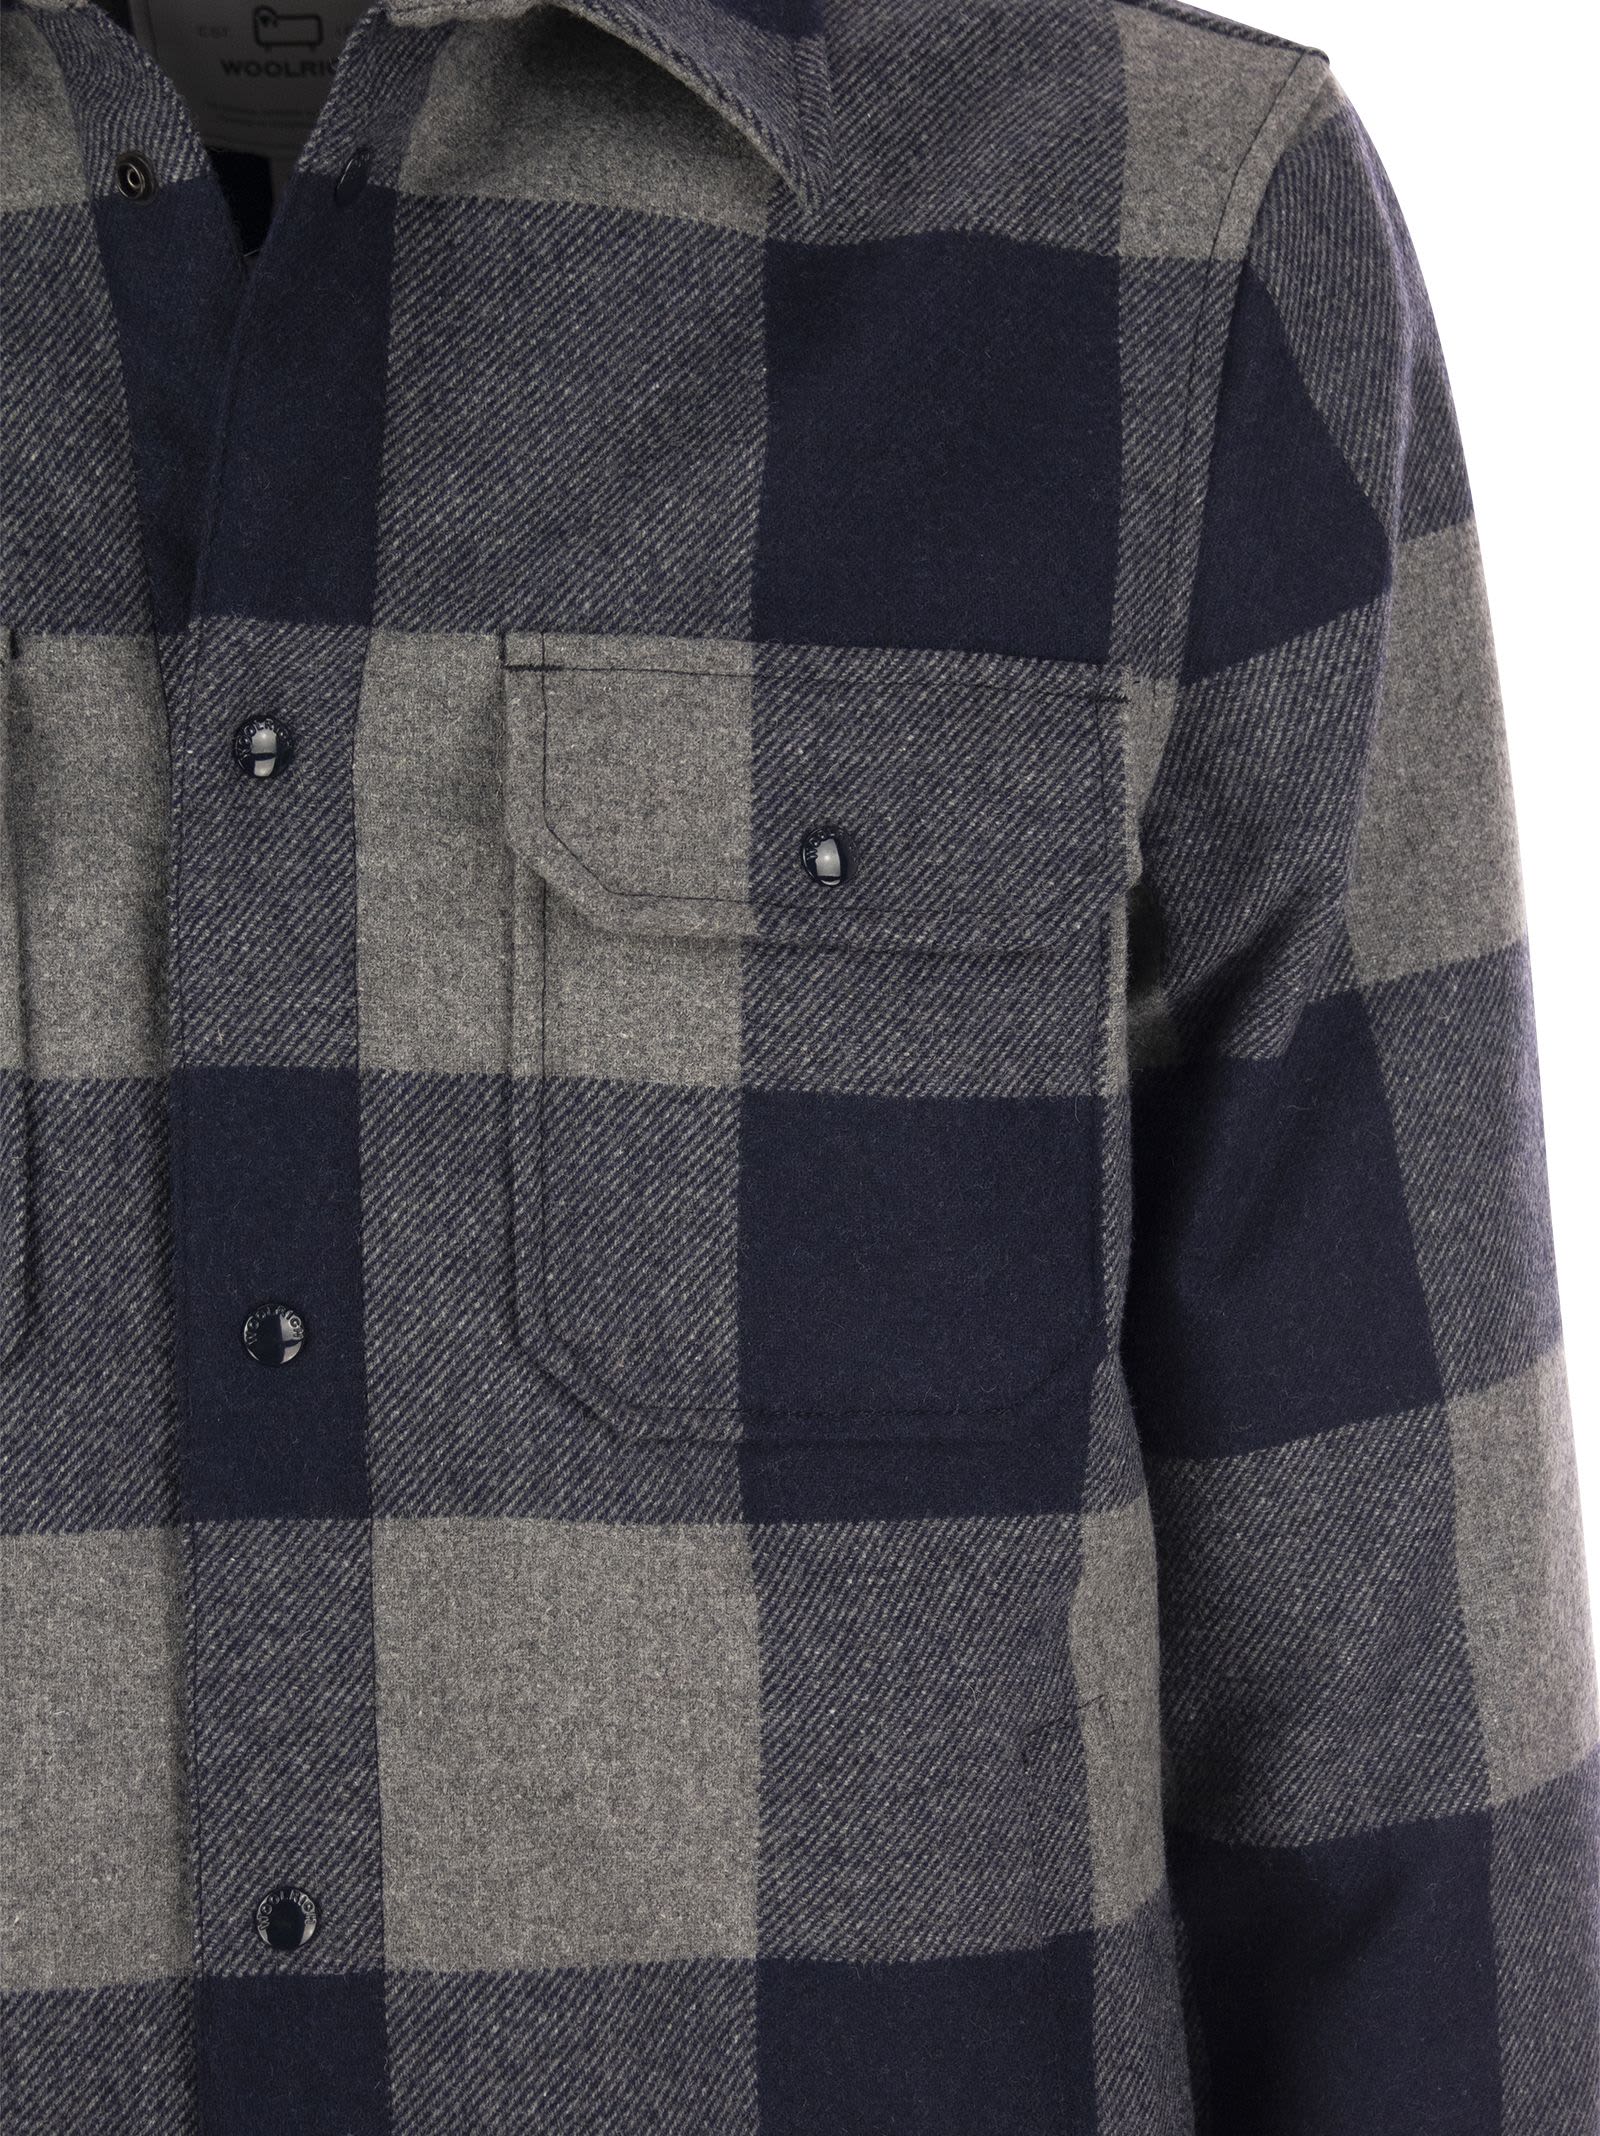 Shop Woolrich Alaskan Check Shirt Jacket In Blue/grey